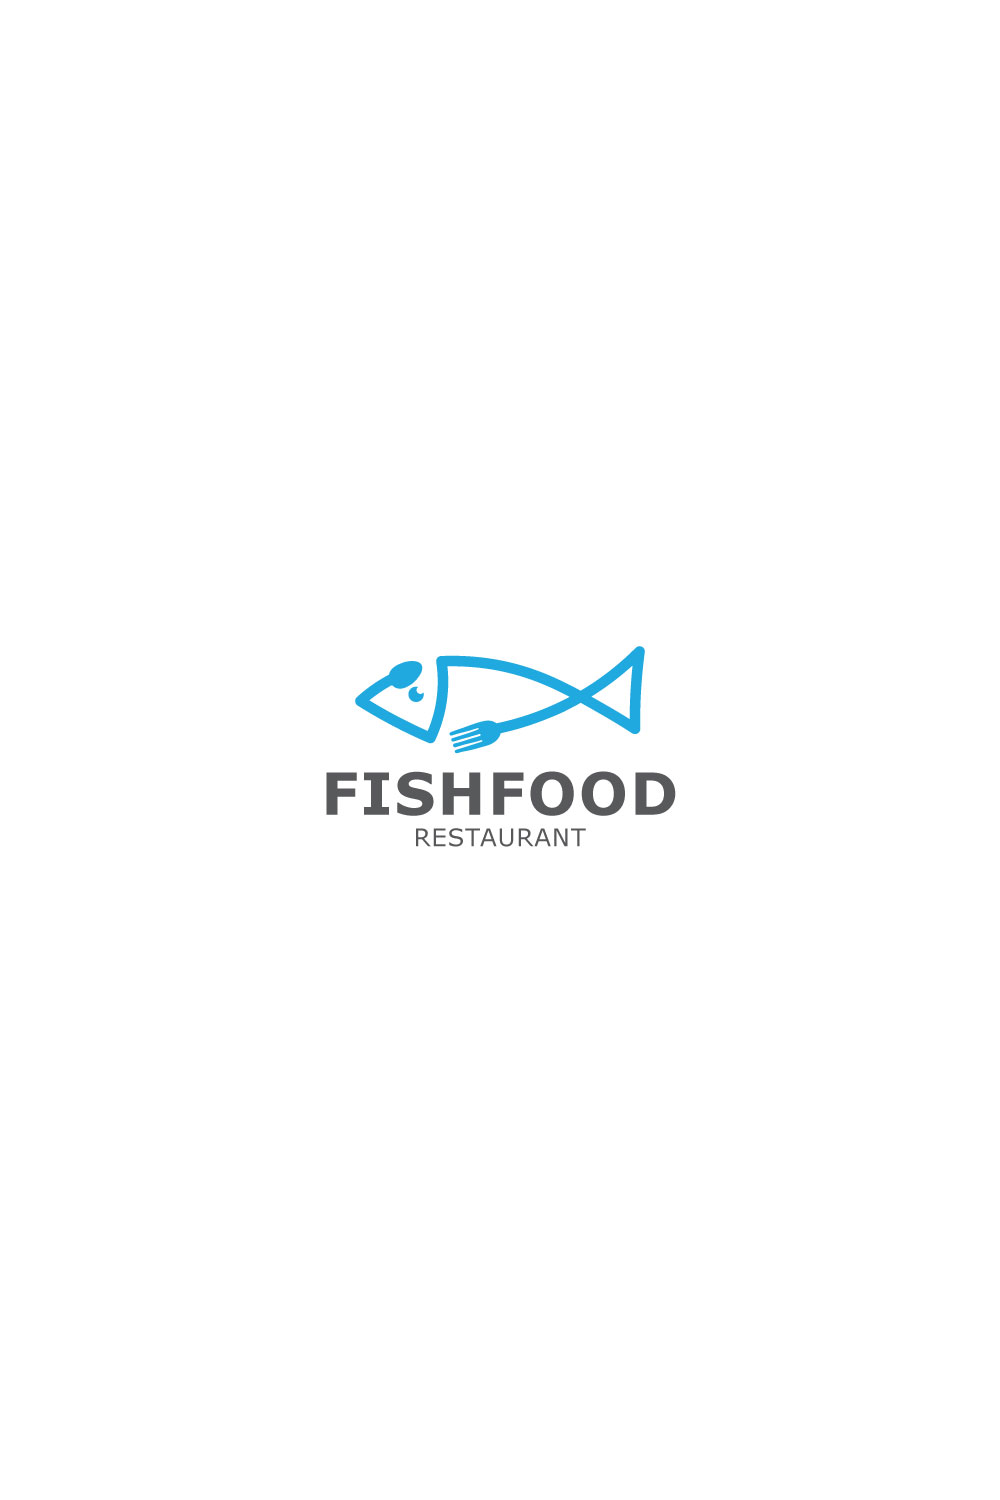 Initial Fish Food Restaurant design pinterest preview image.